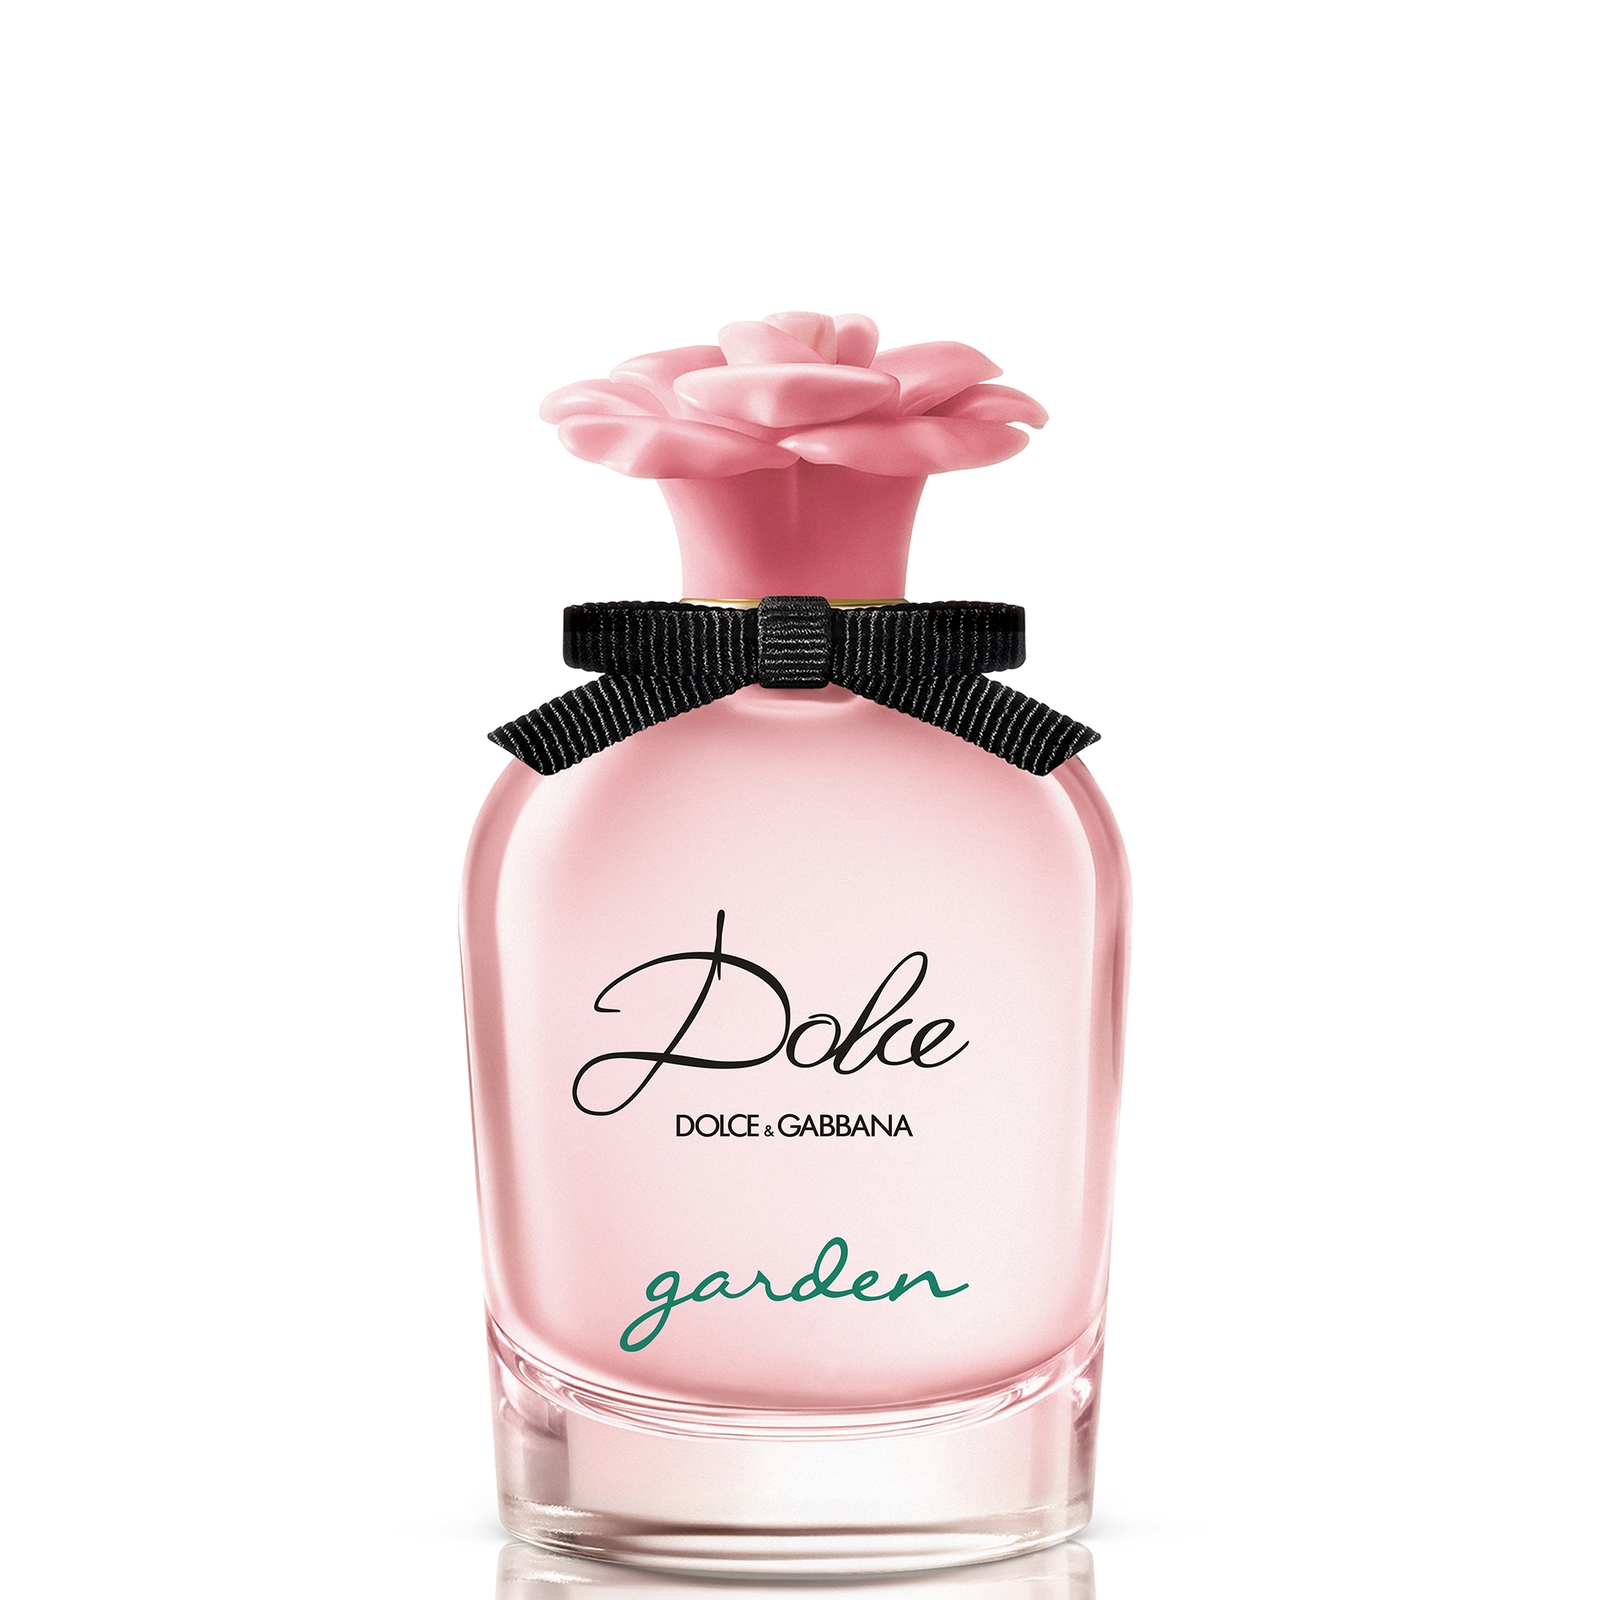 DolceandGabbana Dolce Garden Eau de Parfum Spray 75ml